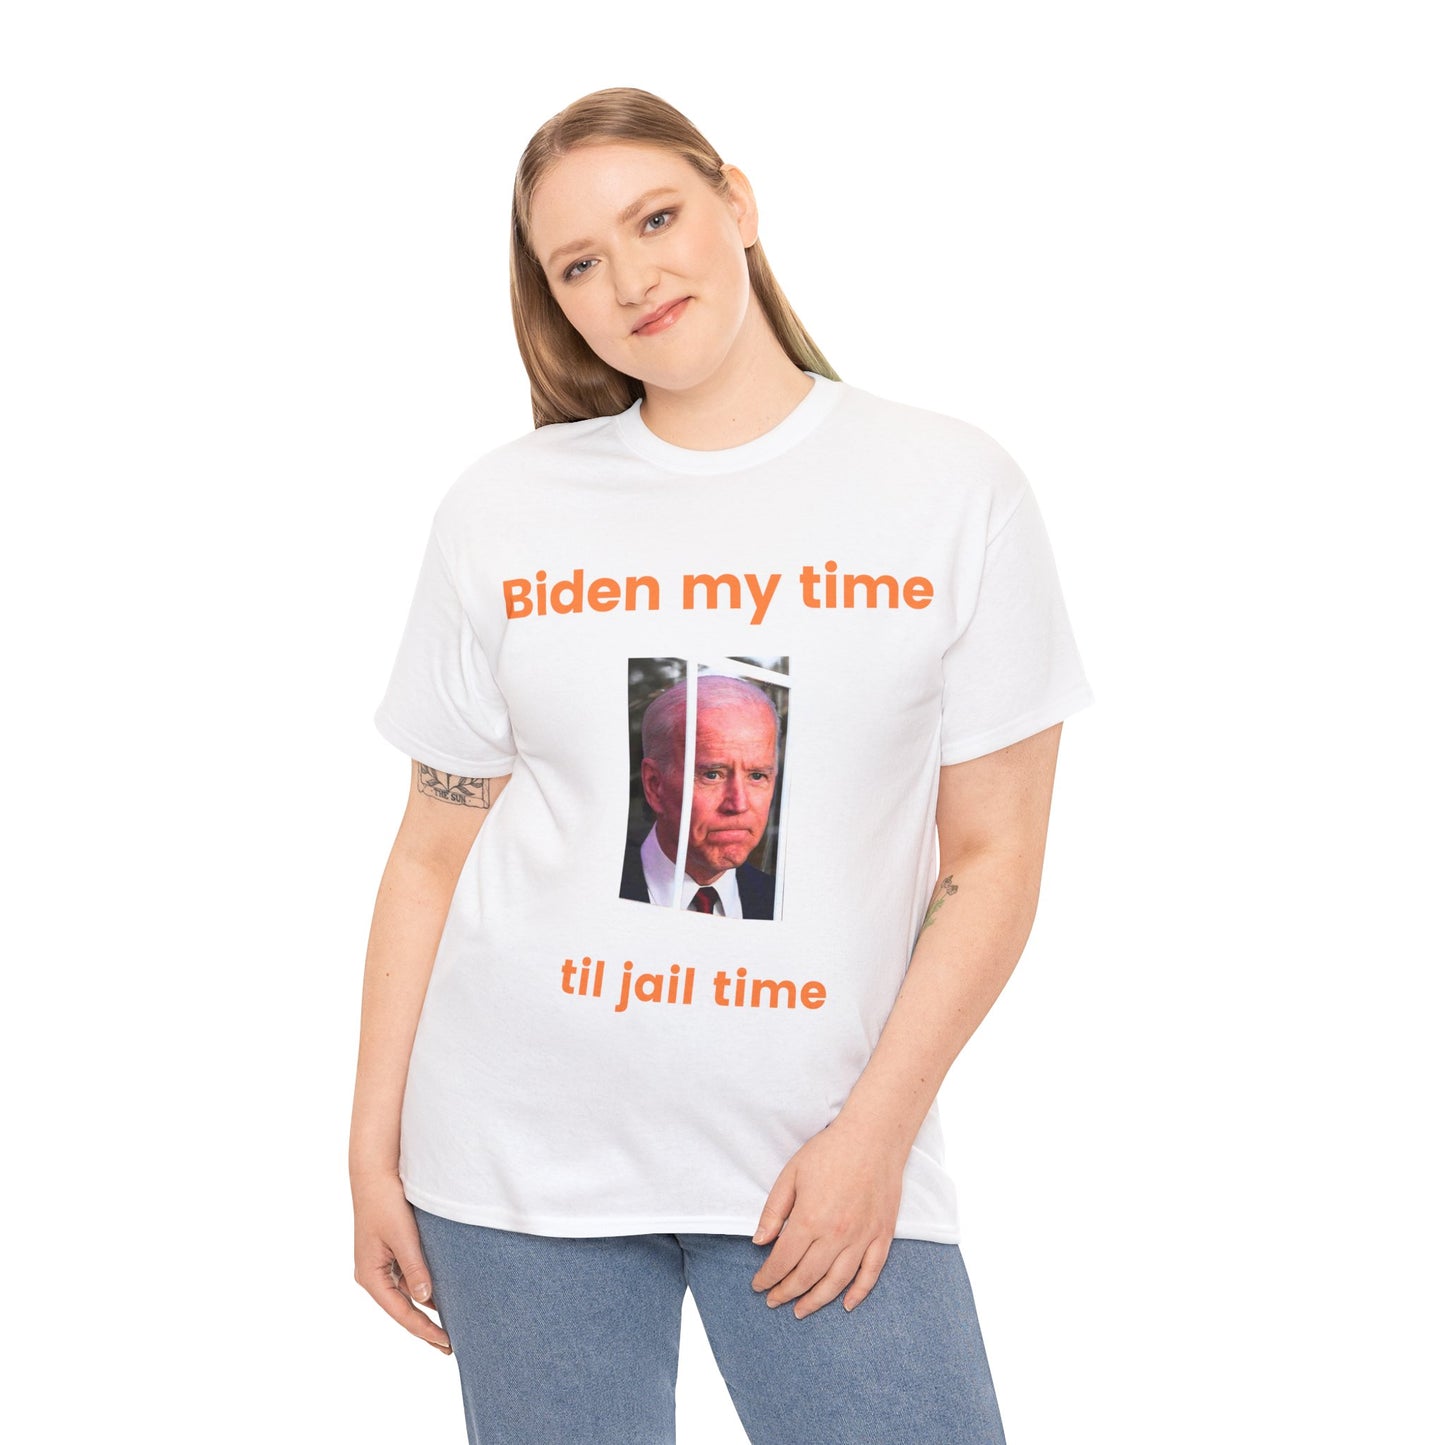 Biden - "Biden my time til jail time"